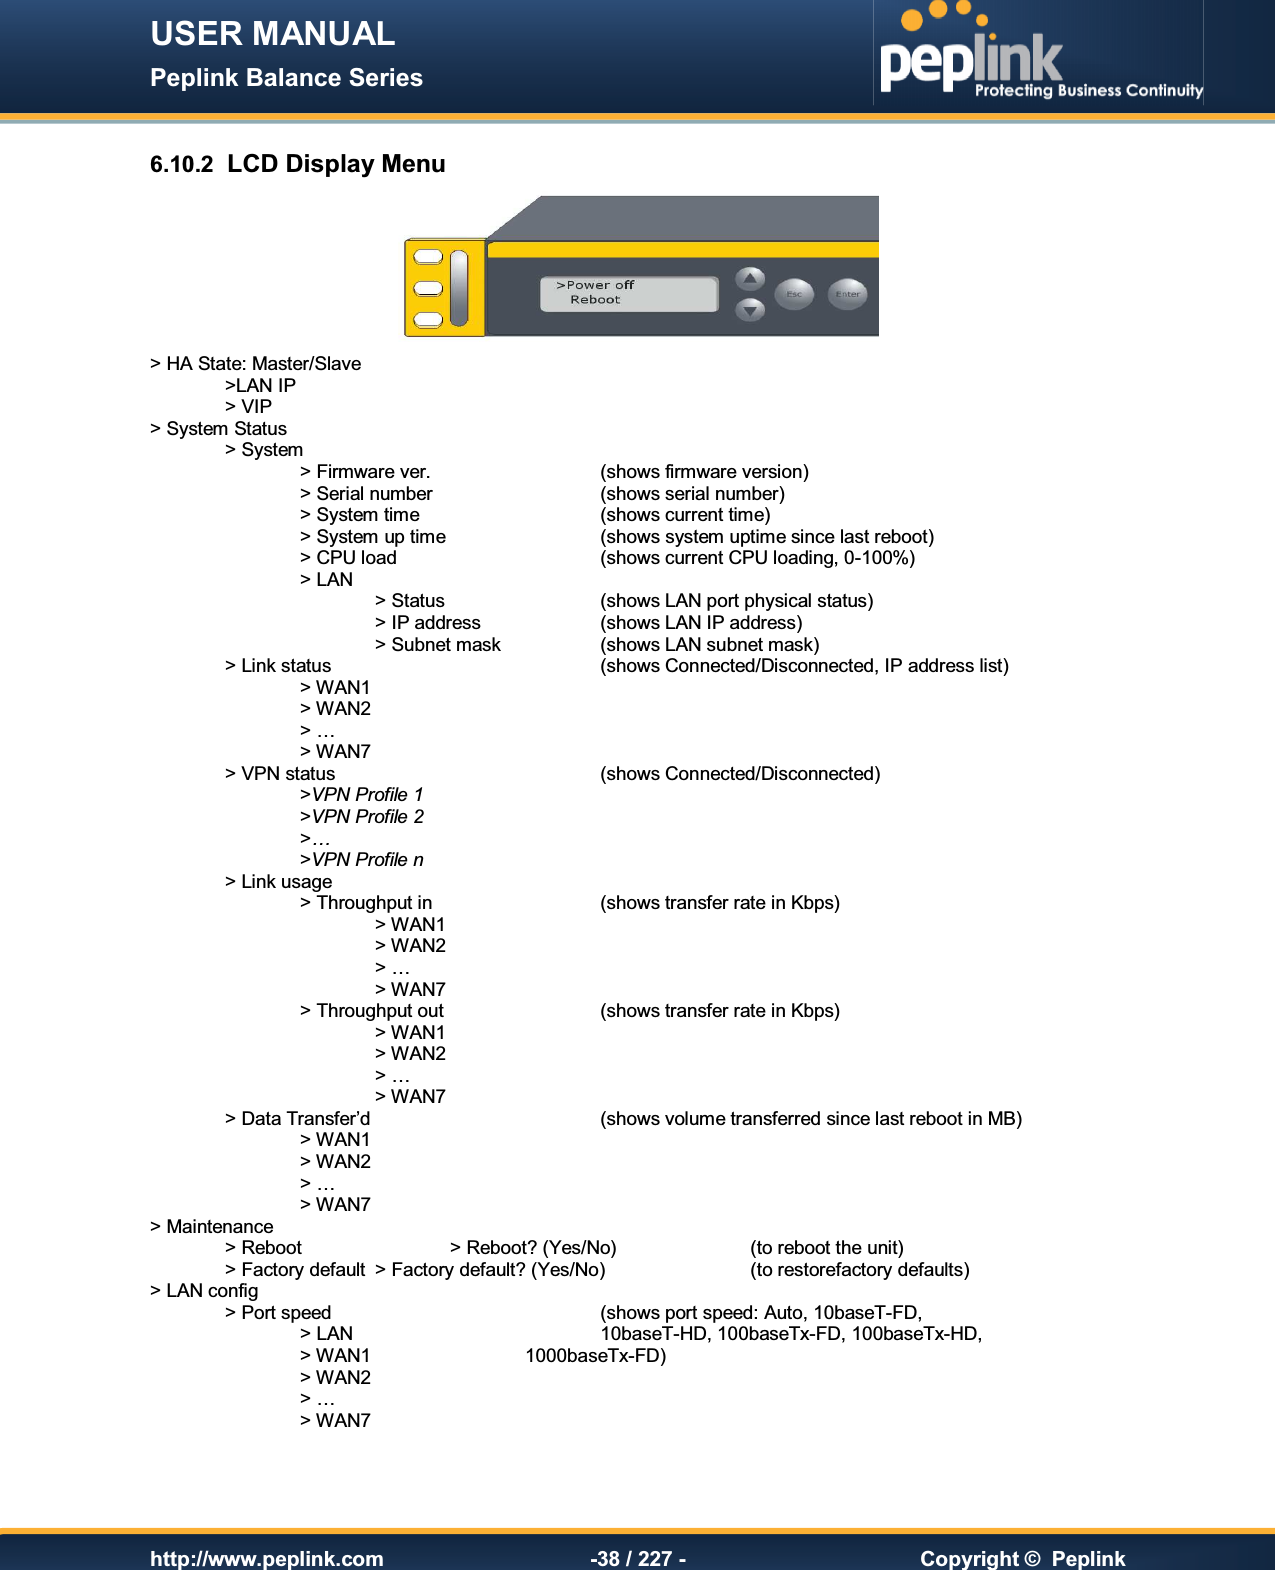 USER MANUAL Peplink Balance Series   http://www.peplink.com -38 / 227 -  Copyright ©  Peplink 6.10.2  LCD Display Menu  &gt; HA State: Master/Slave   &gt;LAN IP   &gt; VIP &gt; System Status     &gt; System         &gt; Firmware ver.      (shows firmware version)     &gt; Serial number      (shows serial number)     &gt; System time      (shows current time)     &gt; System up time     (shows system uptime since last reboot)     &gt; CPU load      (shows current CPU loading, 0-100%)     &gt; LAN         &gt; Status     (shows LAN port physical status)       &gt; IP address    (shows LAN IP address)       &gt; Subnet mask    (shows LAN subnet mask)   &gt; Link status        (shows Connected/Disconnected, IP address list)     &gt; WAN1        &gt; WAN2 &gt; …    &gt; WAN7   &gt; VPN status        (shows Connected/Disconnected)     &gt;VPN Profile 1     &gt;VPN Profile 2     &gt;…     &gt;VPN Profile n   &gt; Link usage       &gt; Throughput in      (shows transfer rate in Kbps)       &gt; WAN1        &gt; WAN2       &gt; …       &gt; WAN7     &gt; Throughput out     (shows transfer rate in Kbps)       &gt; WAN1          &gt; WAN2       &gt; …       &gt; WAN7   &gt; Data Transfer’d       (shows volume transferred since last reboot in MB)     &gt; WAN1     &gt; WAN2     &gt; …     &gt; WAN7 &gt; Maintenance     &gt; Reboot    &gt; Reboot? (Yes/No)    (to reboot the unit)   &gt; Factory default  &gt; Factory default? (Yes/No)    (to restorefactory defaults) &gt; LAN config     &gt; Port speed        (shows port speed: Auto, 10baseT-FD,      &gt; LAN        10baseT-HD, 100baseTx-FD, 100baseTx-HD,     &gt; WAN1     1000baseTx-FD)     &gt; WAN2     &gt; …     &gt; WAN7 